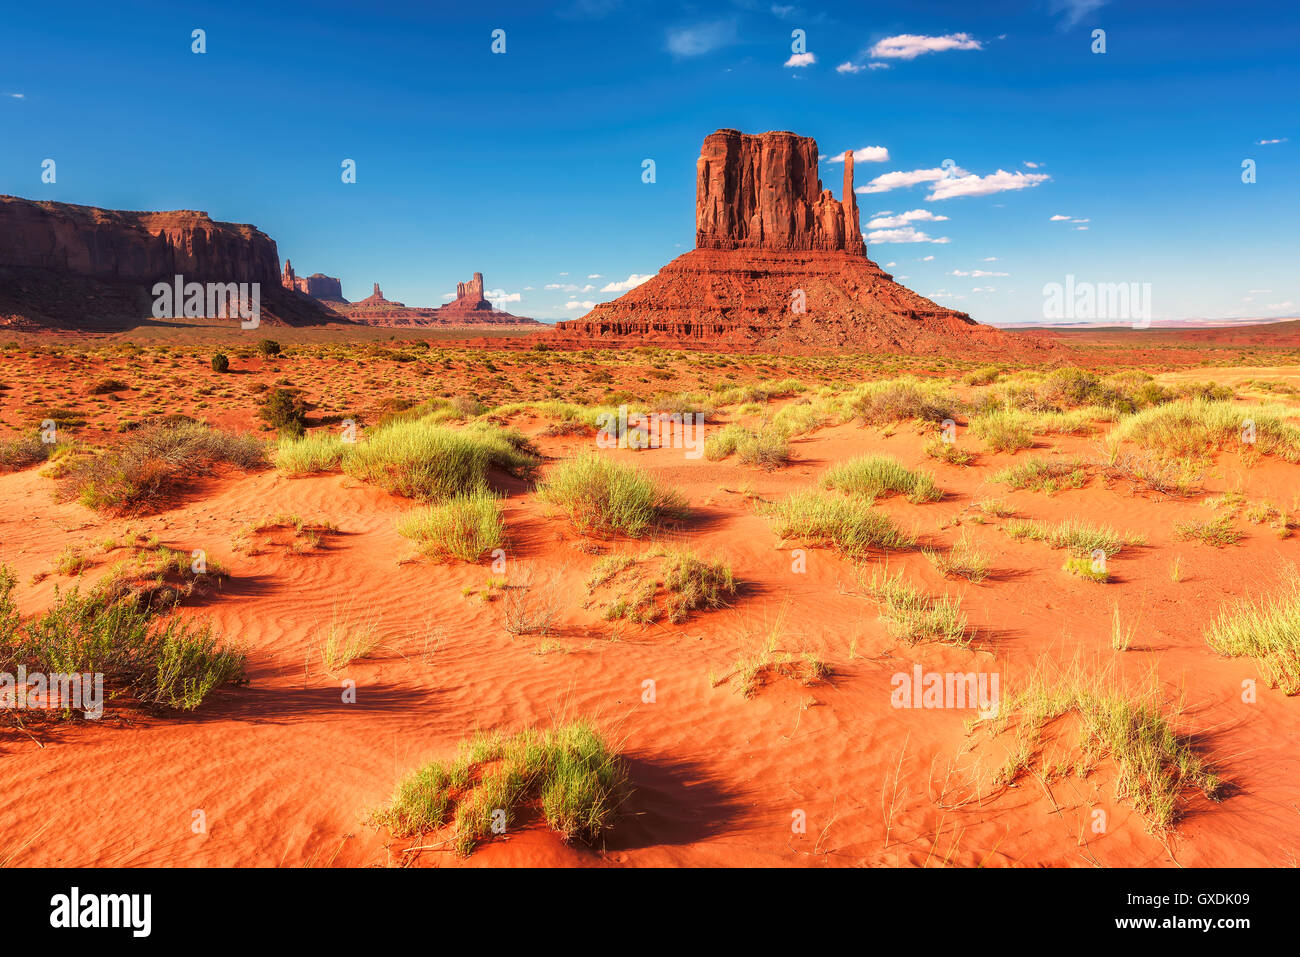 Deserto di sabbia rossa in Monument Valley, Utah, Stati Uniti d'America Foto Stock